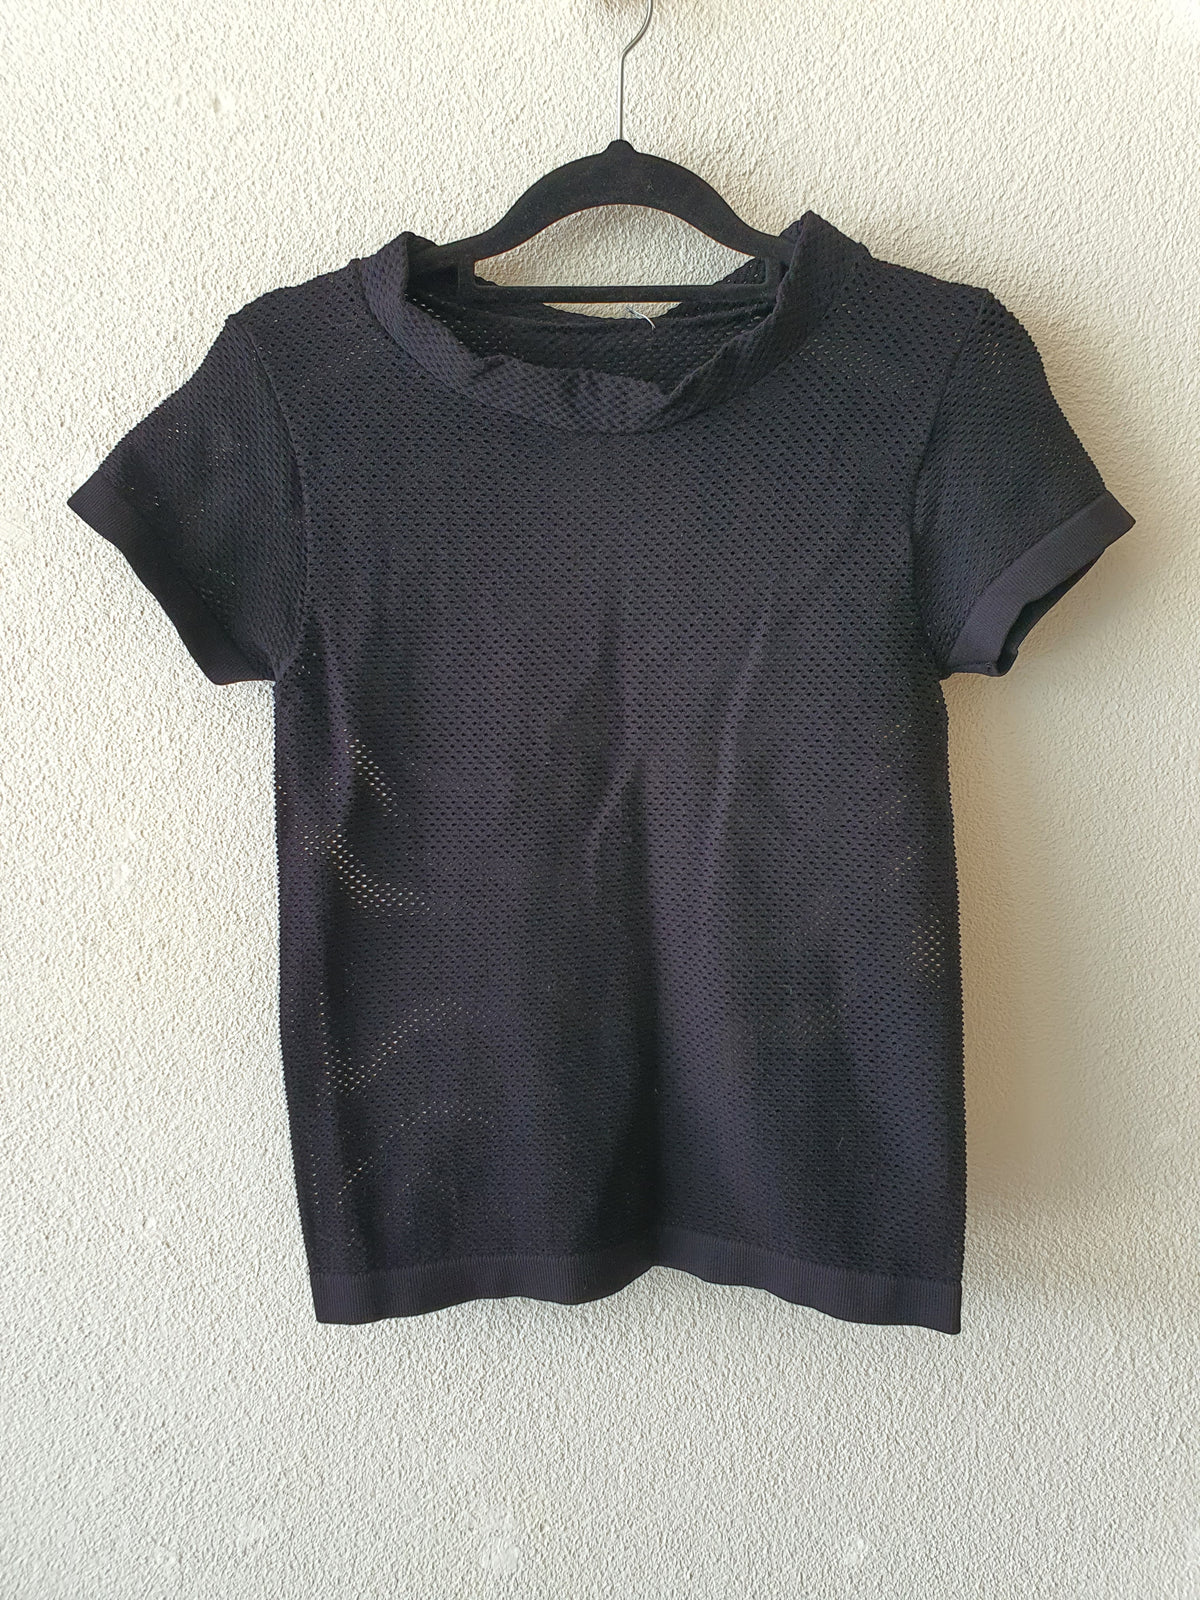 Black Textured T Shirt S